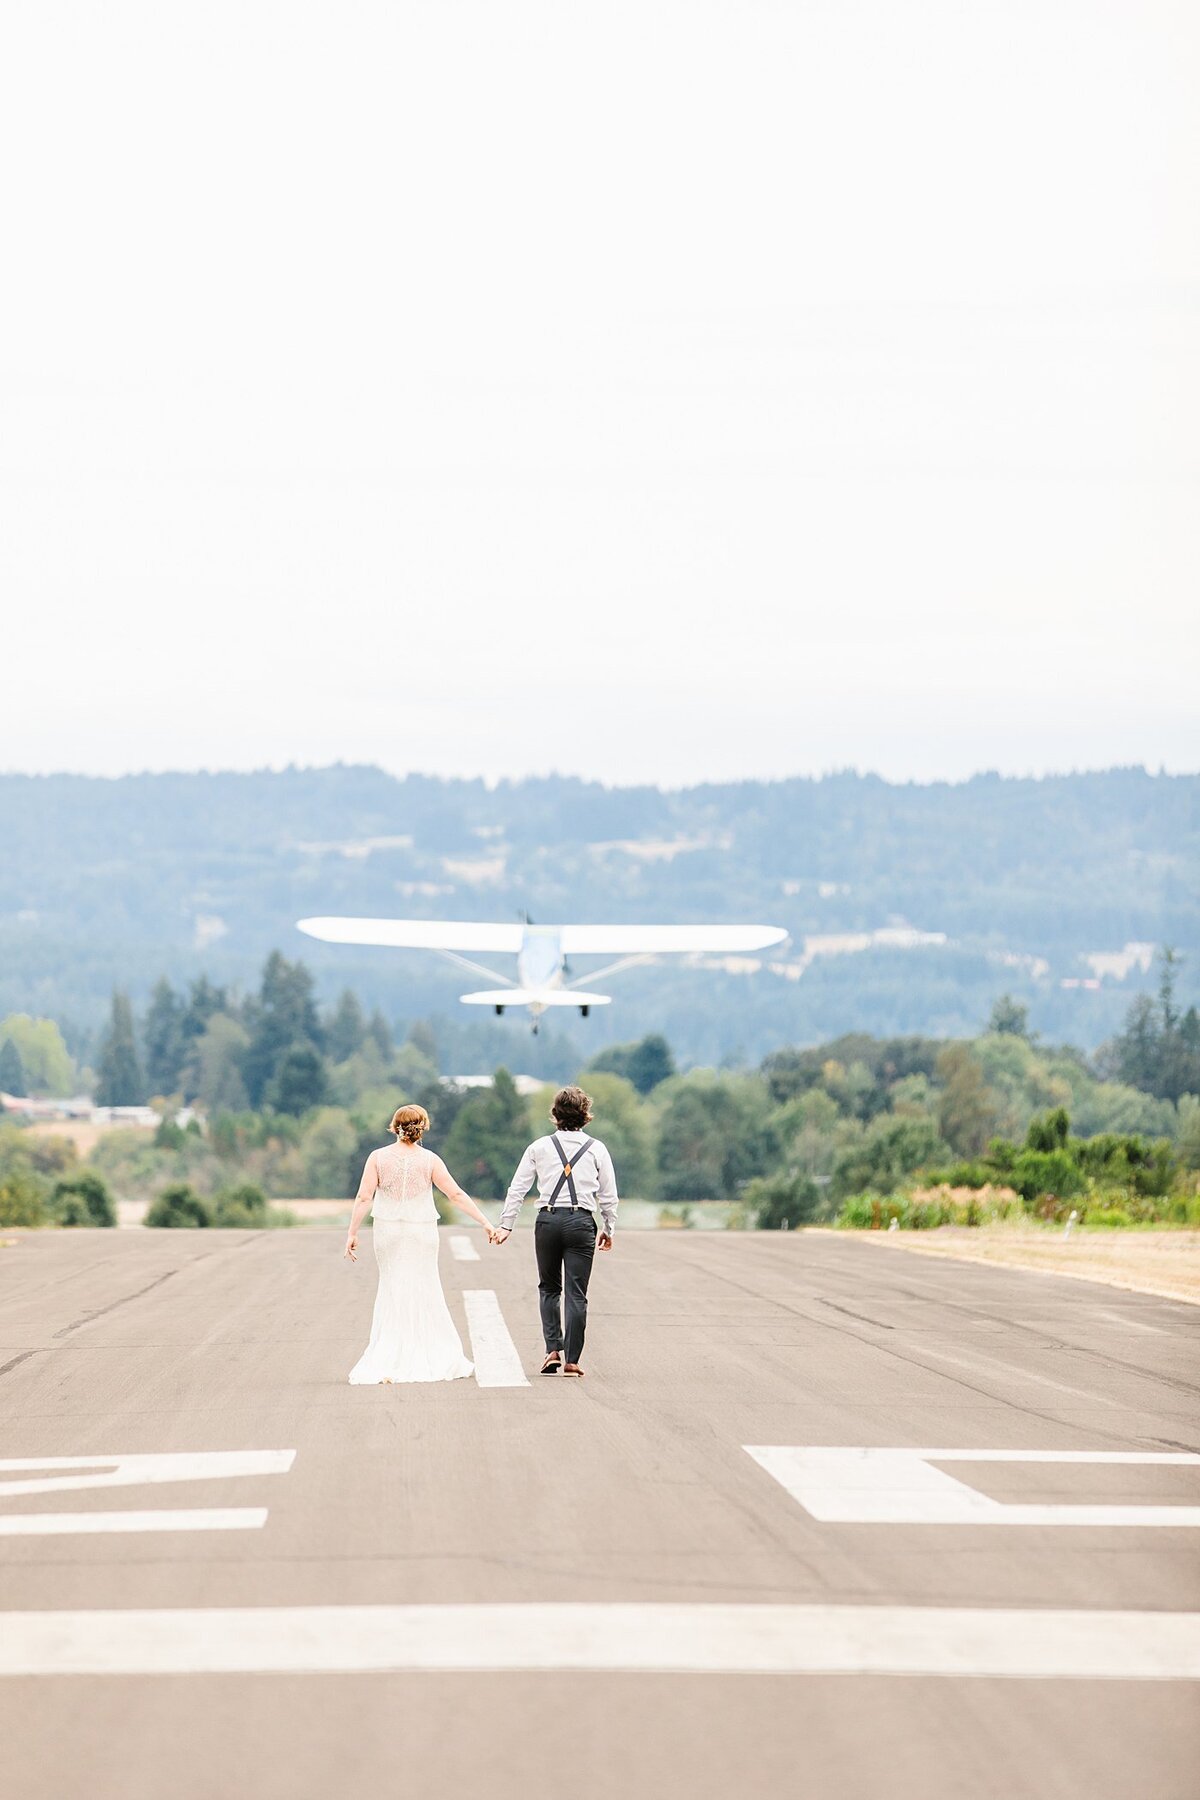 A Pilot's Wedding in an Airplane Hangar Portland OR-1029